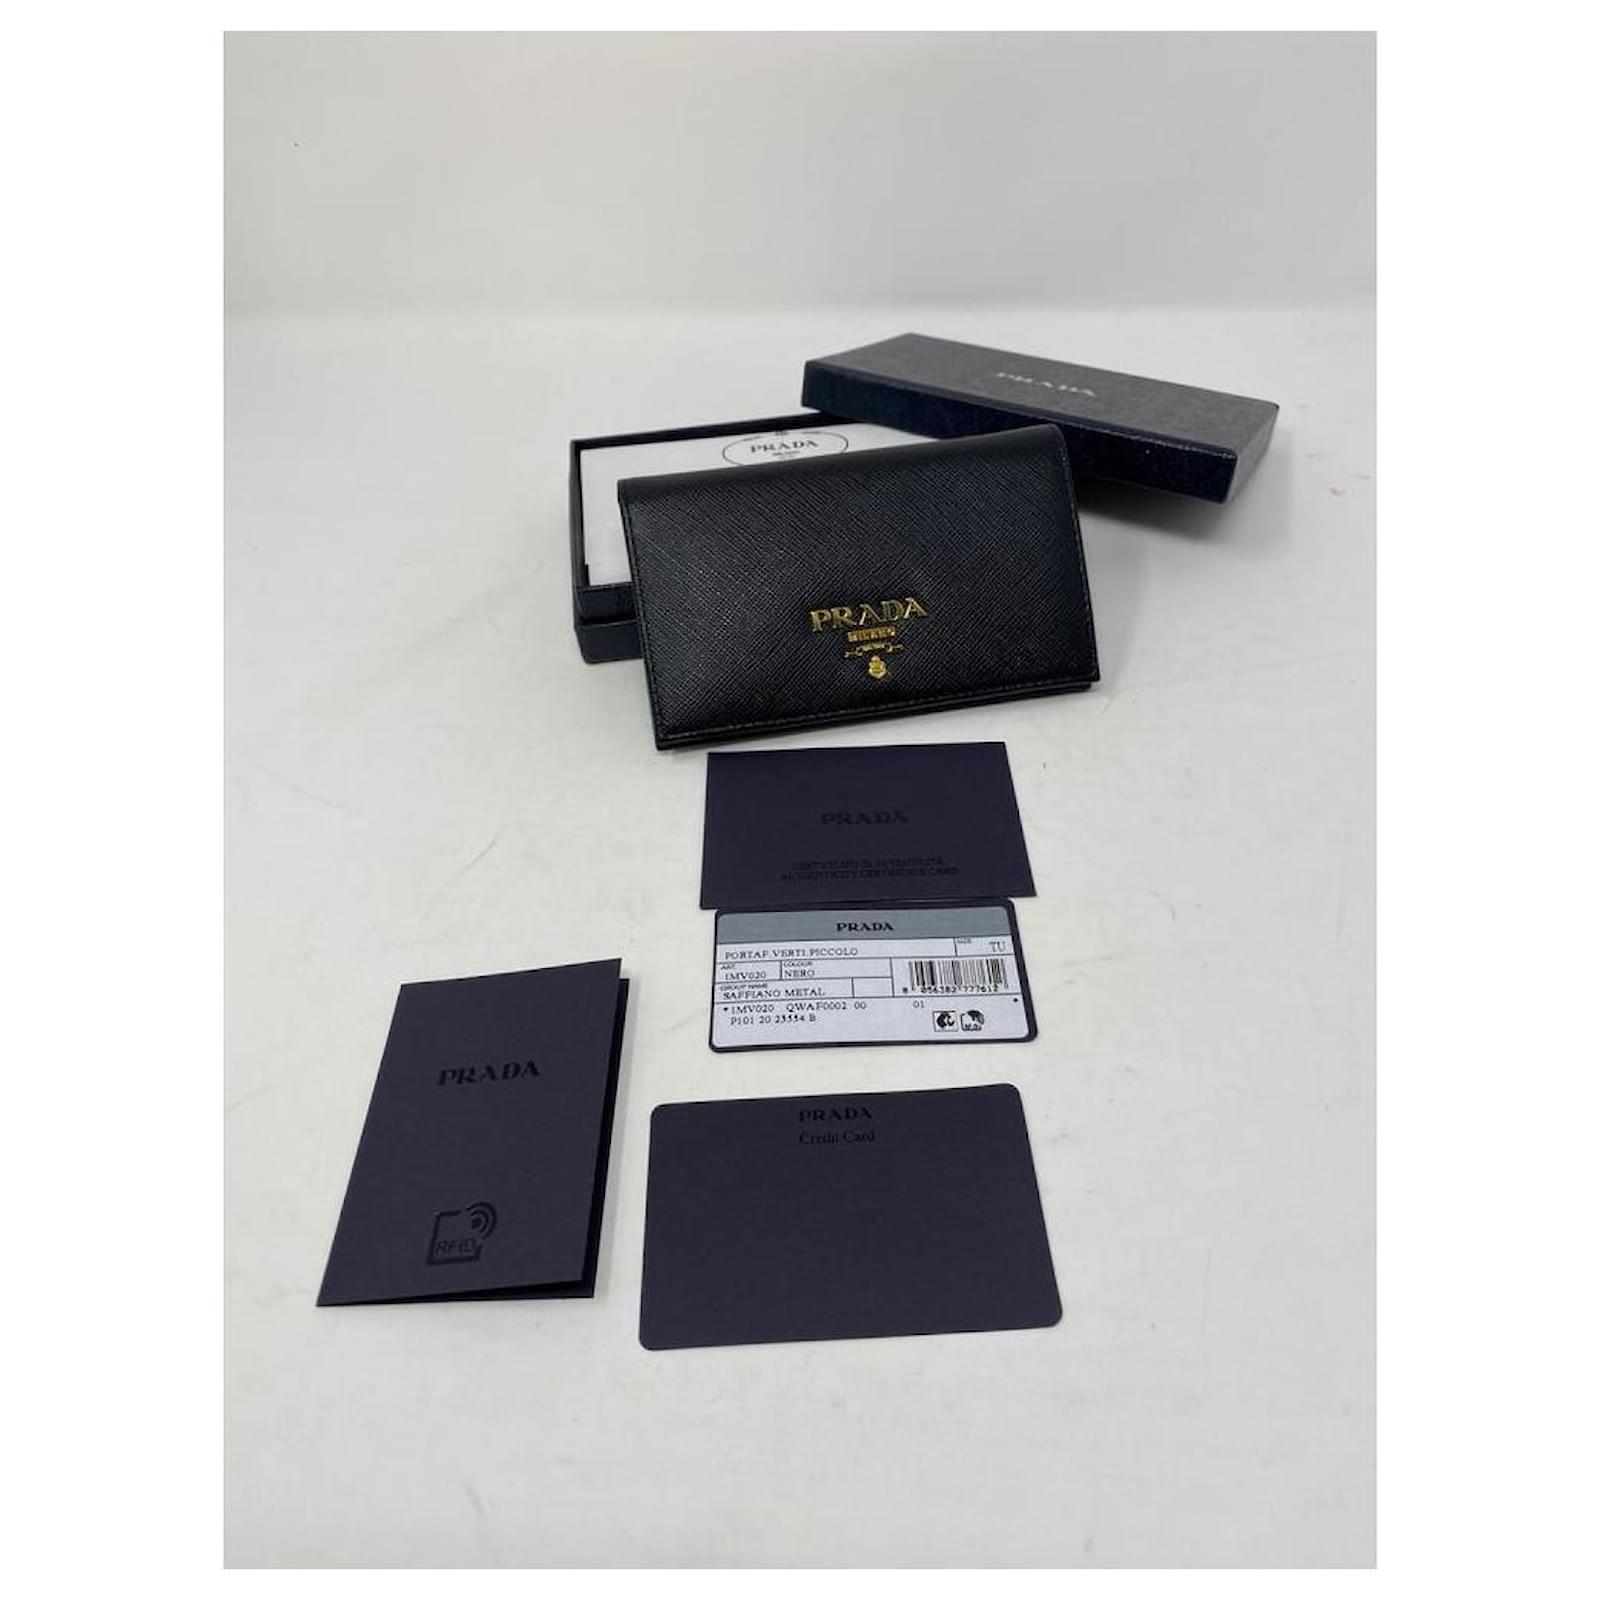 PRADA Saffiano Metal Card Holder Compact Wallet Black 1311577